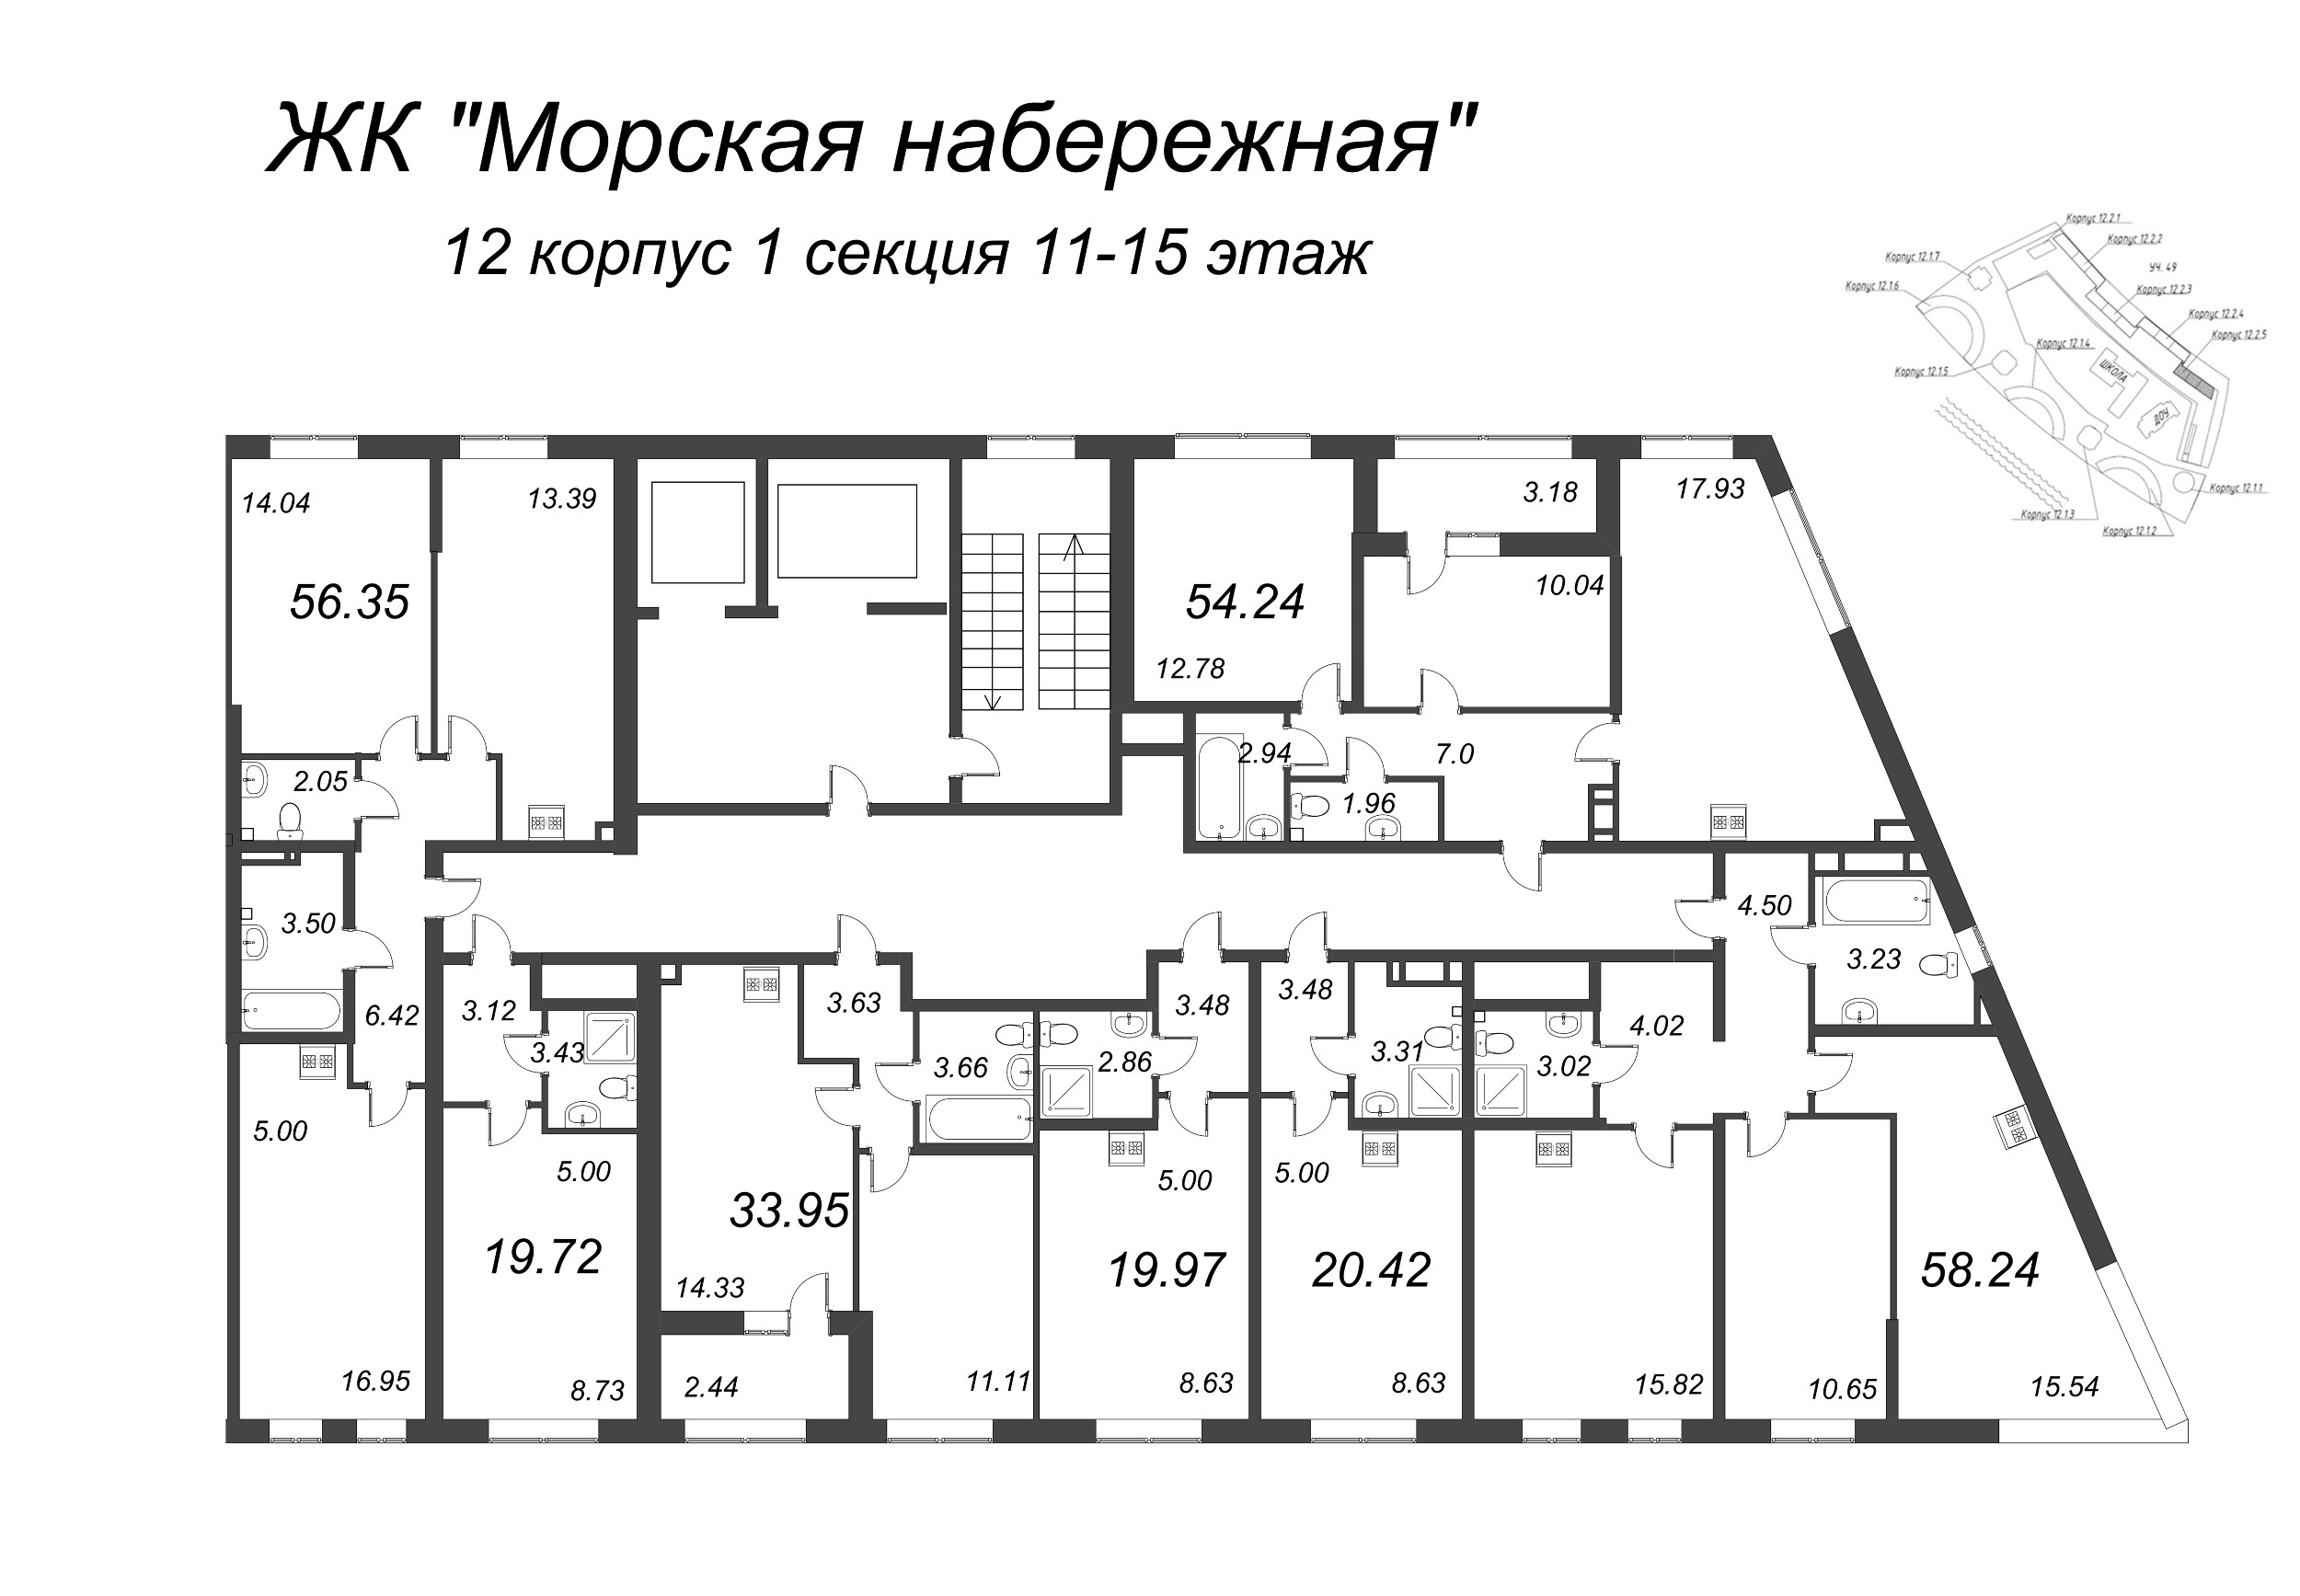 3-комнатная (Евро) квартира, 58.24 м² - планировка этажа